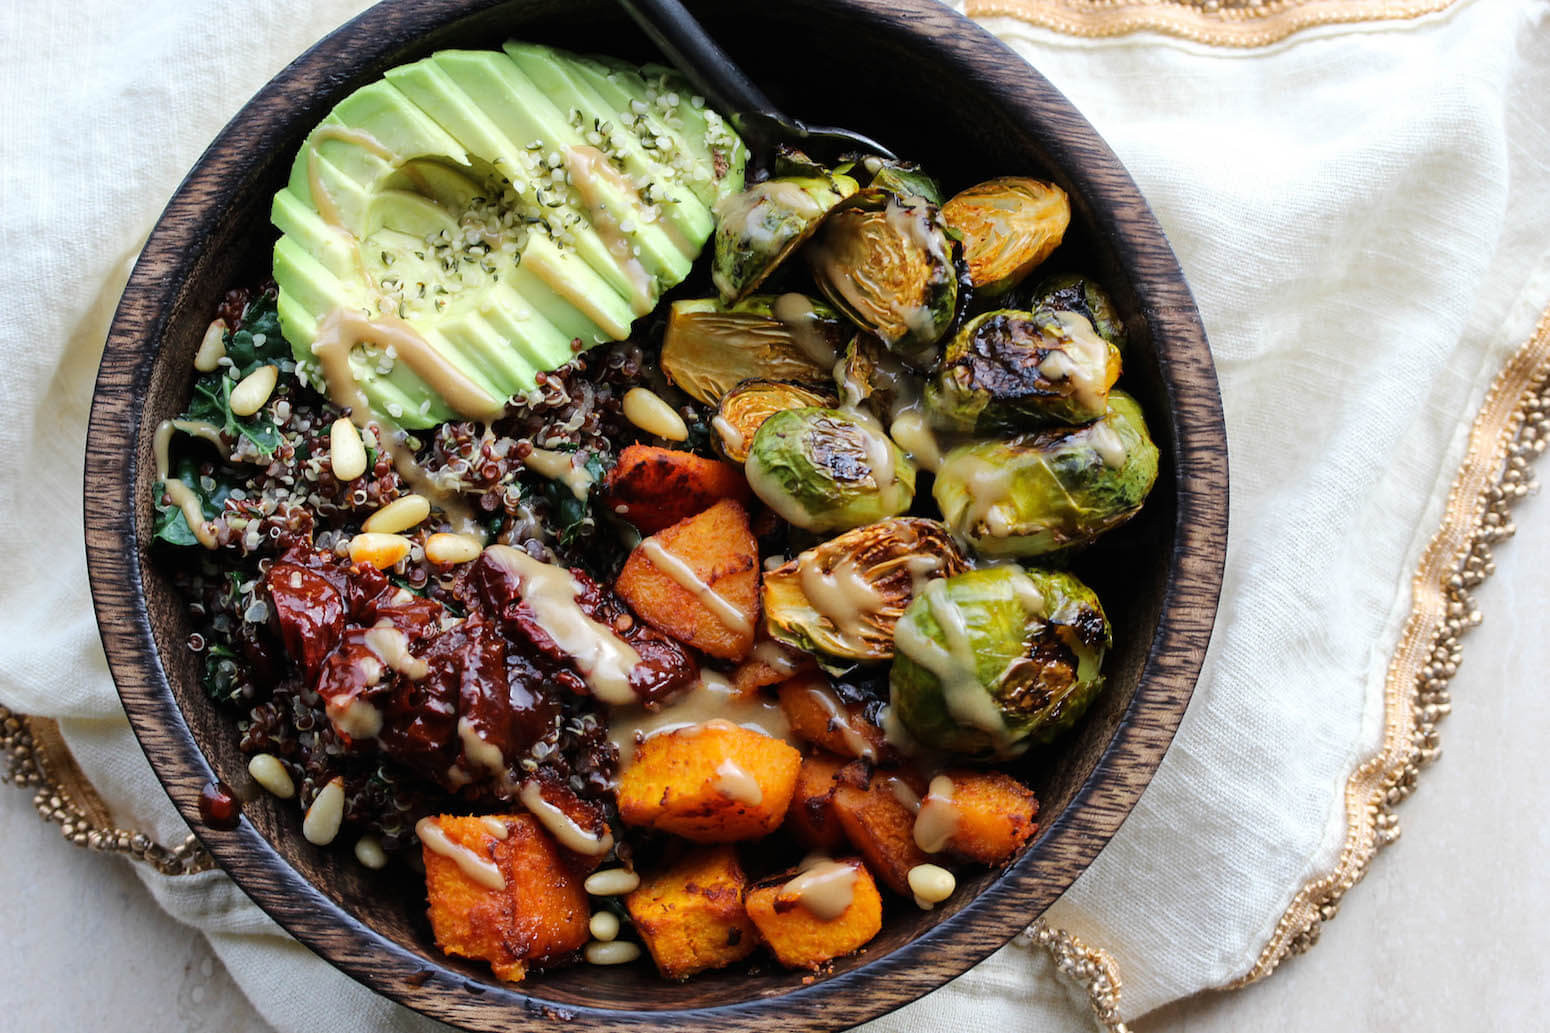 Vegan Fall Recipes
 The 30 Best Healthy Vegan Fall Recipes for Dinner